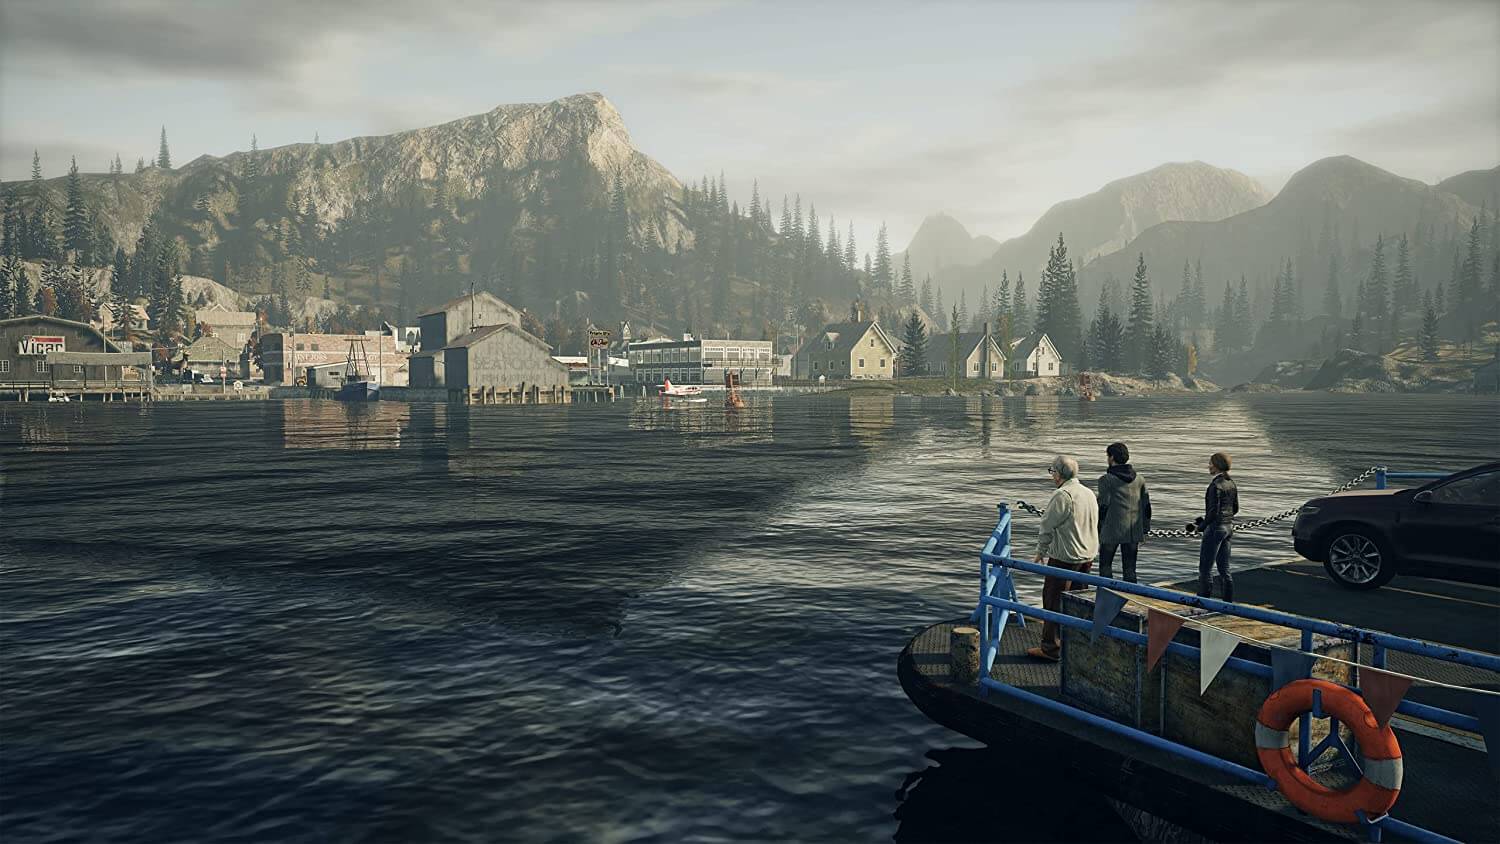 Alan Wake Remastered: 7 Minutes of Gameplay (4K) - IGN